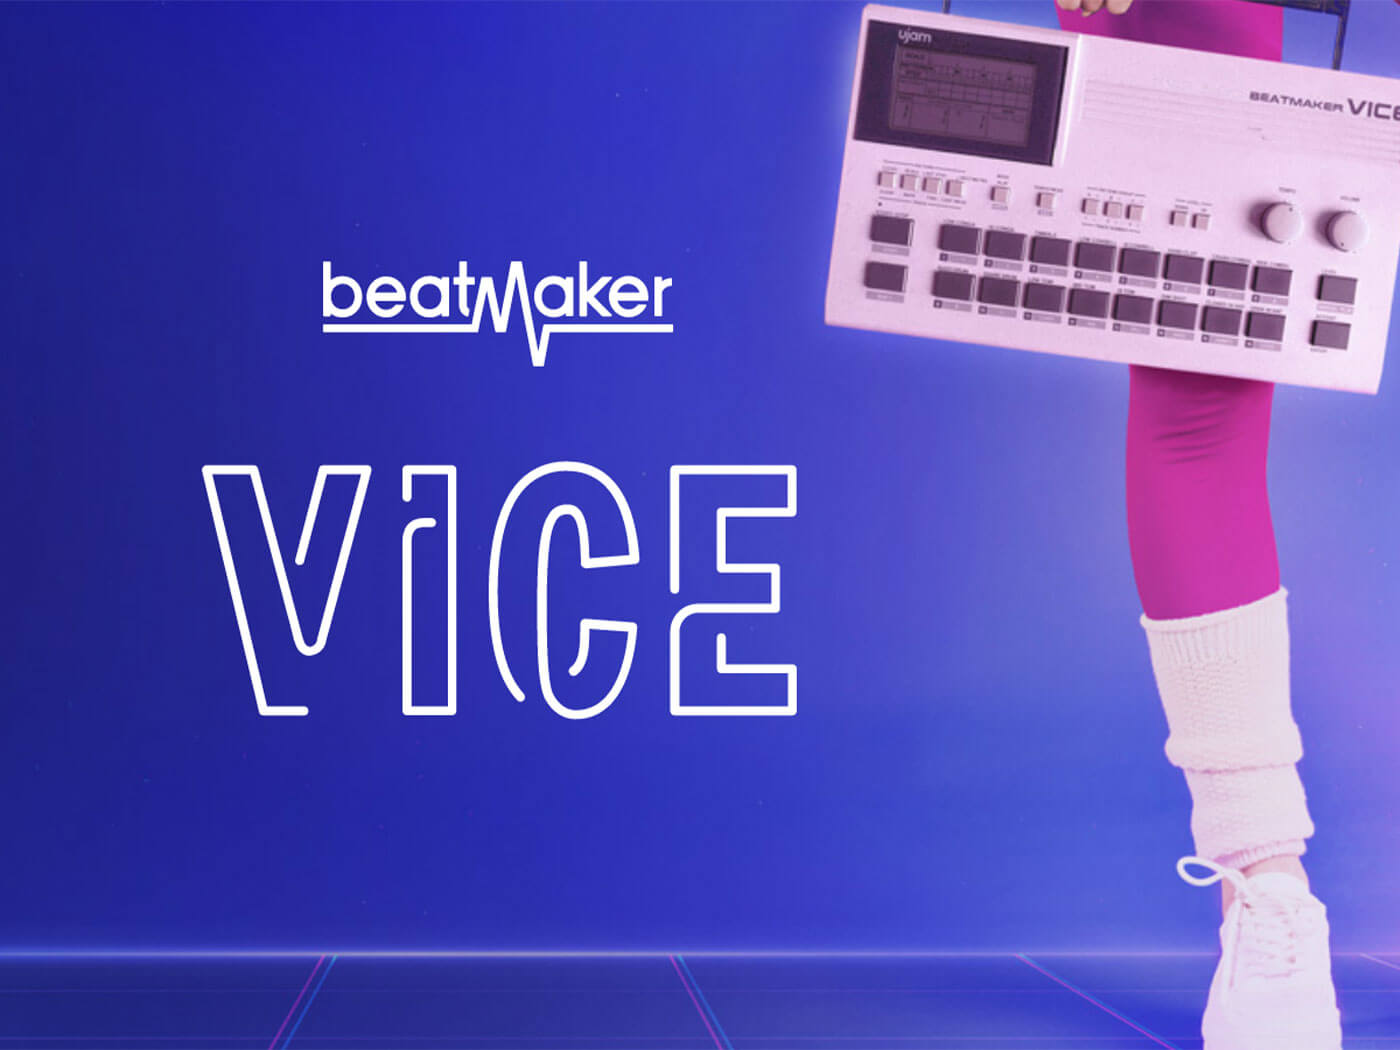 Beatmaker Vice